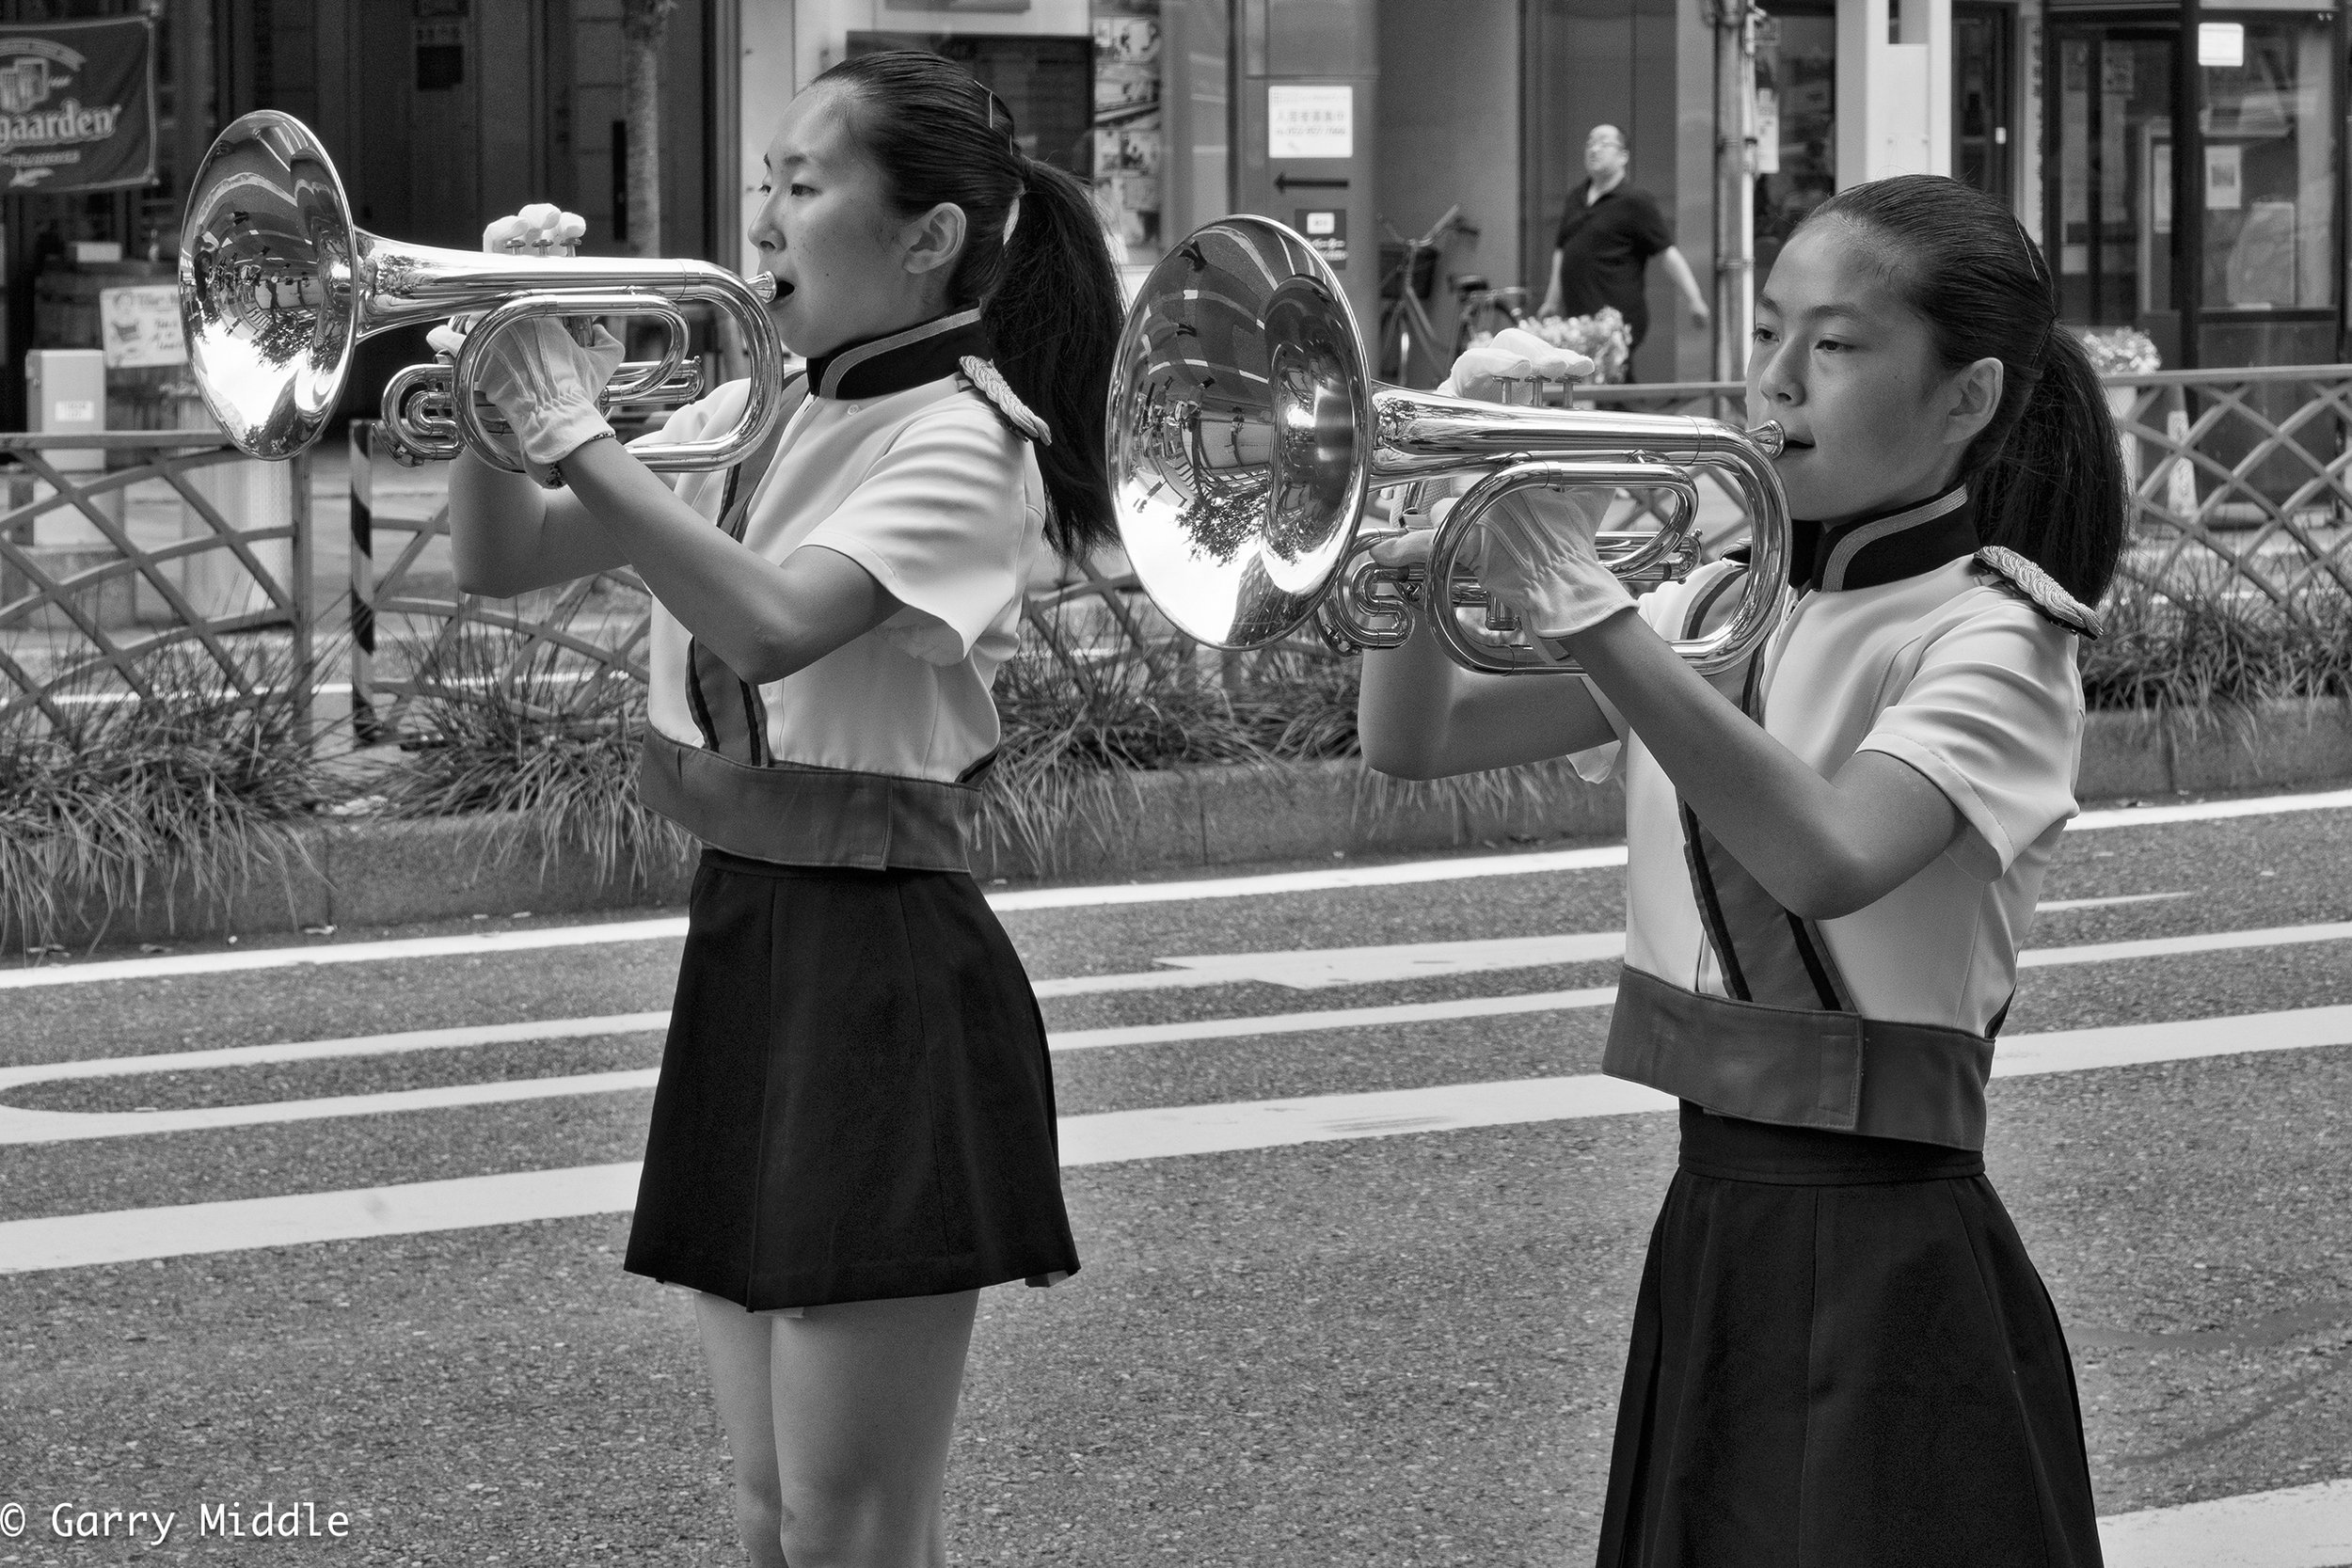 Medium_Nagoya marching band 1.jpg